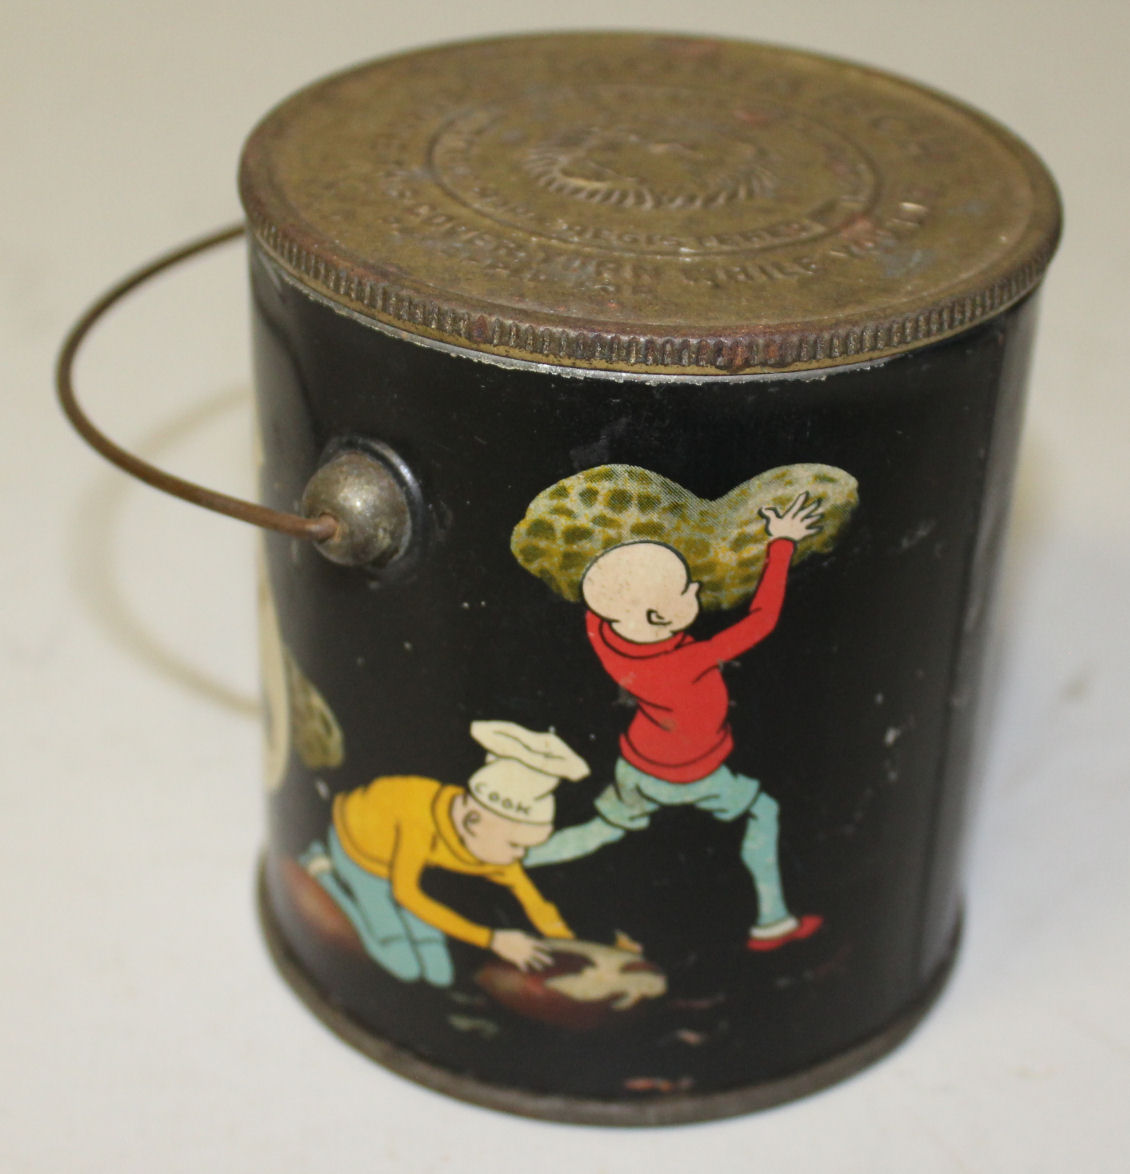 Bargain John's Antiques  Antique Tin Advo Peanut Butter Measuring